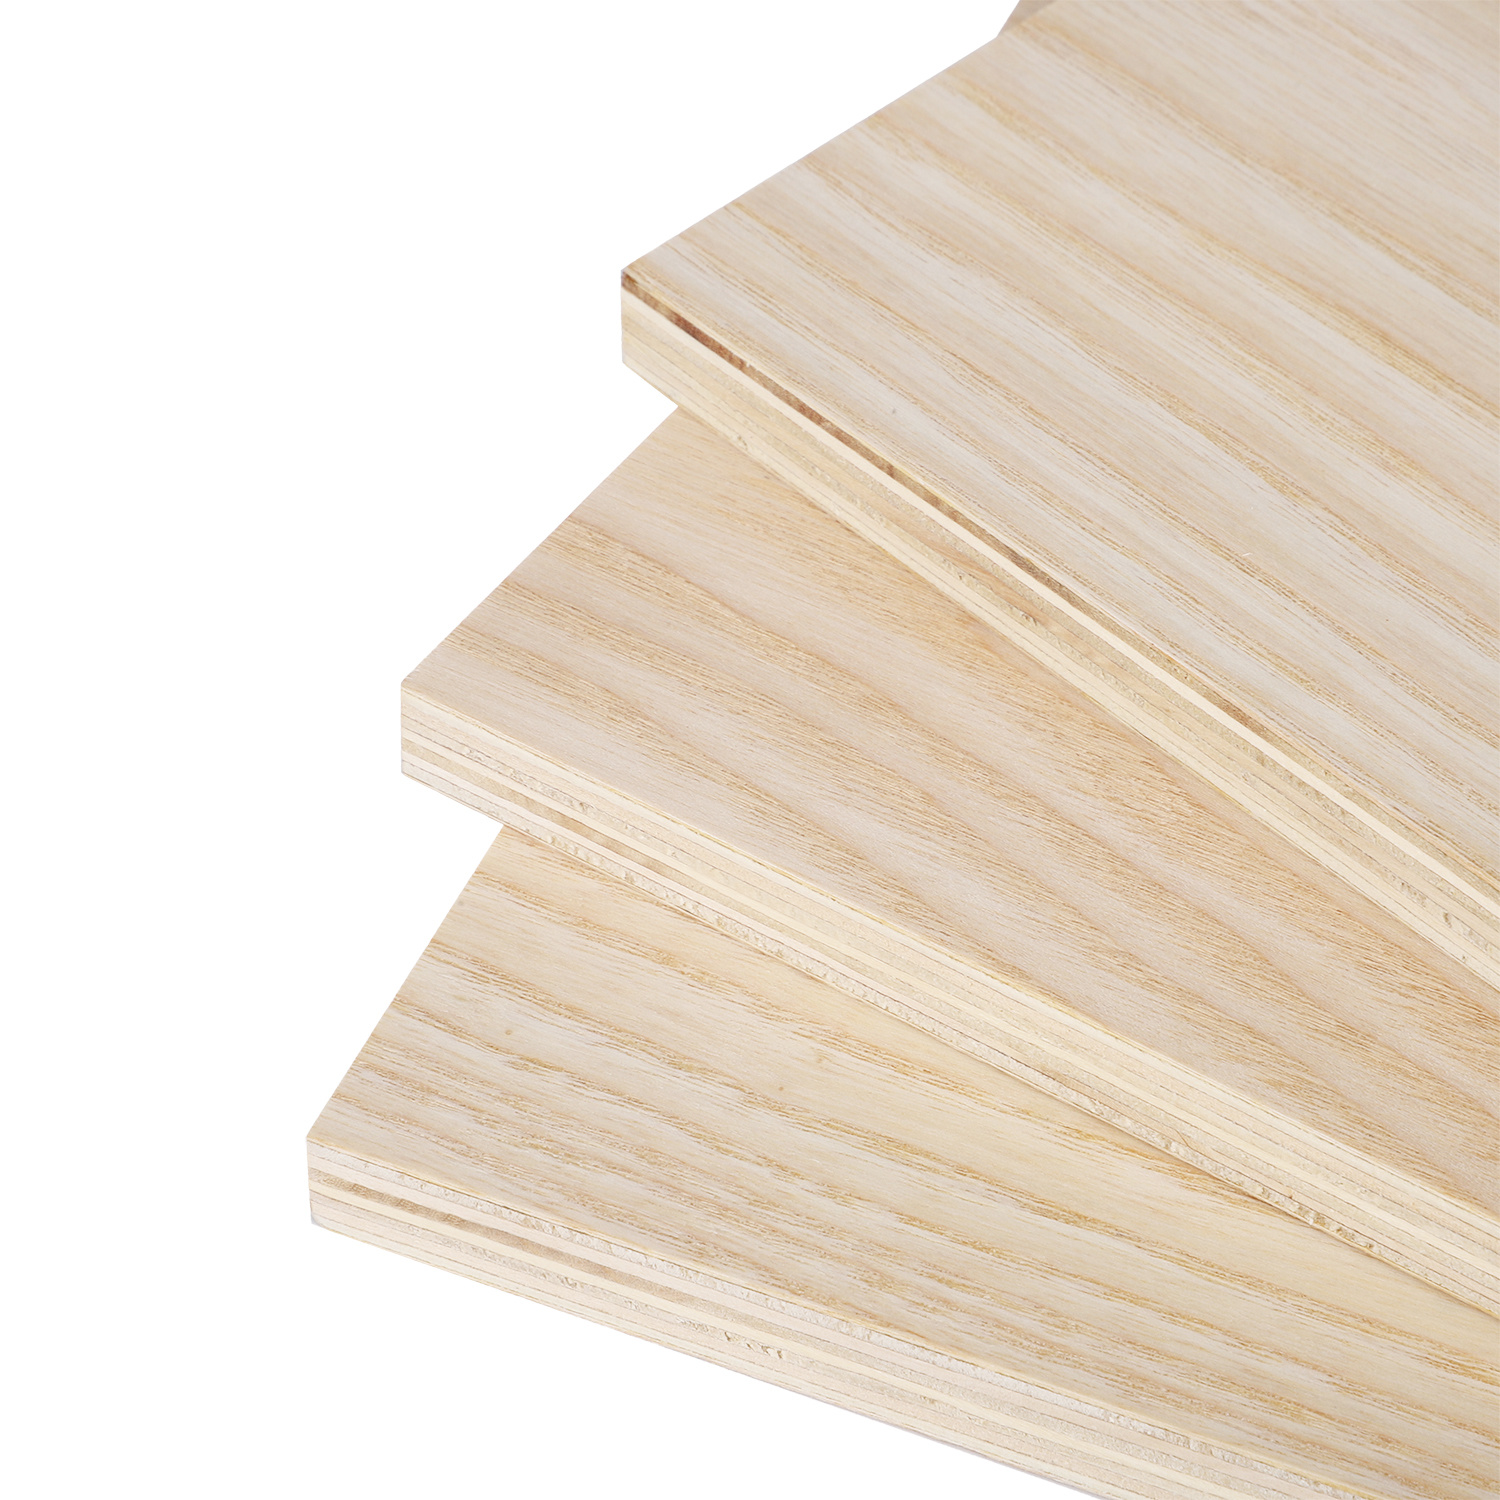 Fancy Woodgrain Plywood Oak Wood Faced Plywood Board for Home Furniture